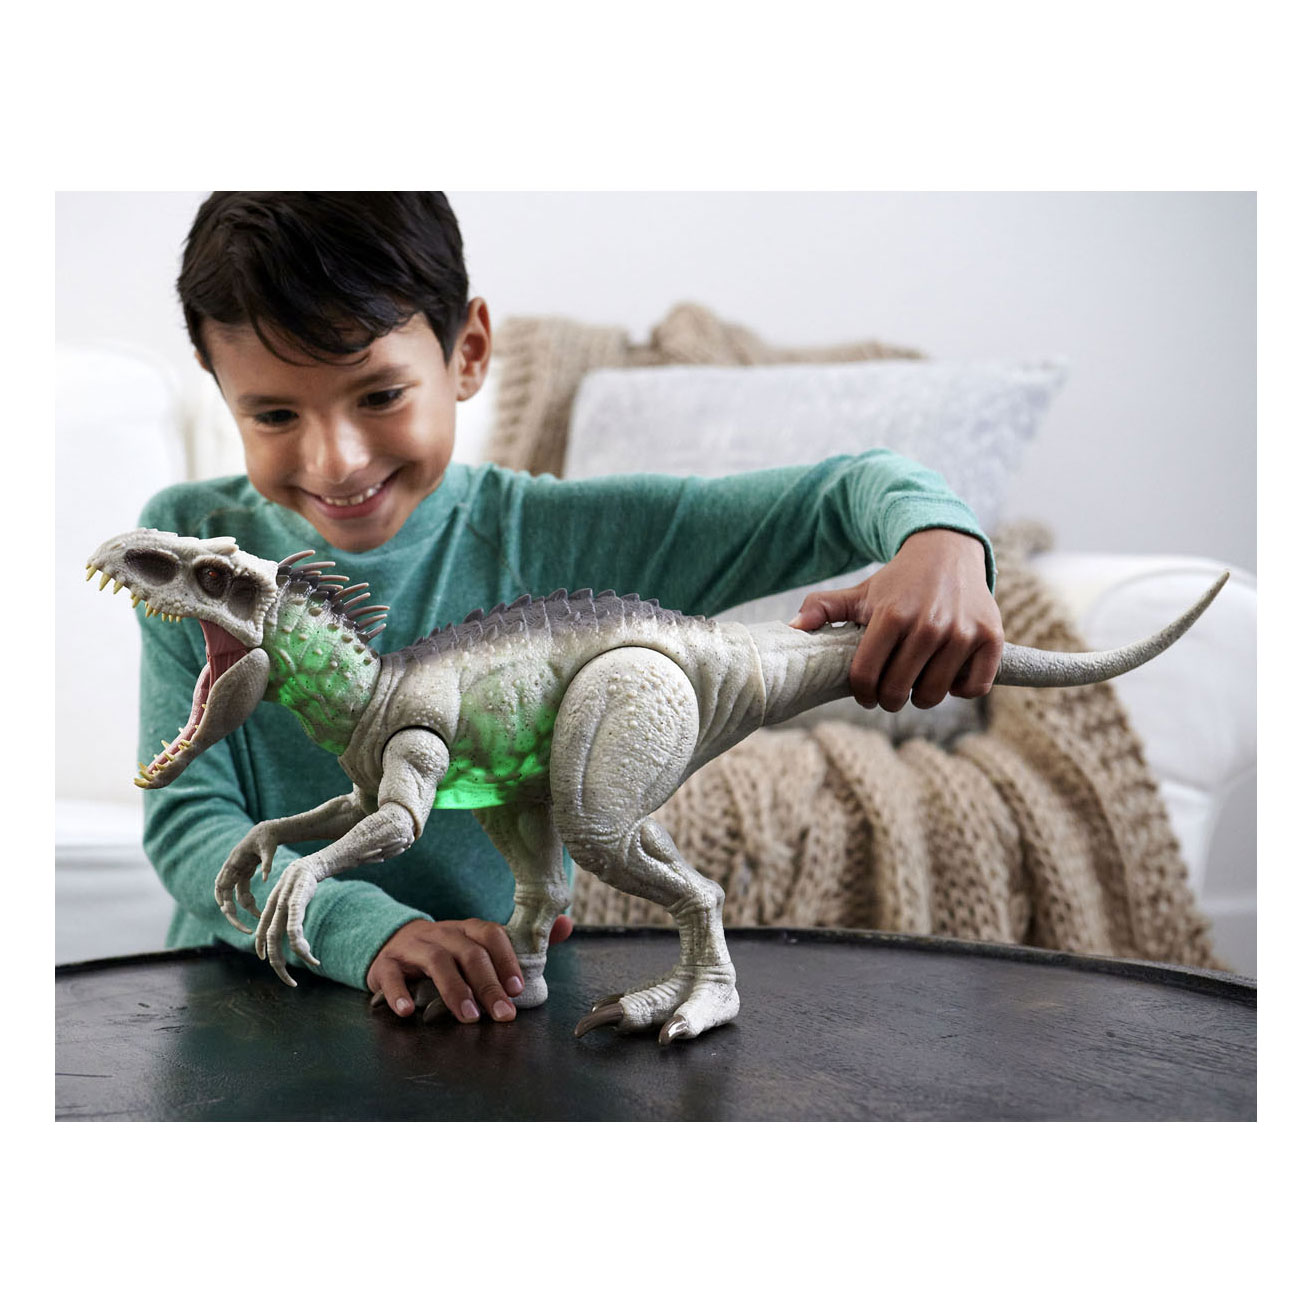 Jurassic World - Figurine de jeu camouflage et combat Indominus Rex Dino